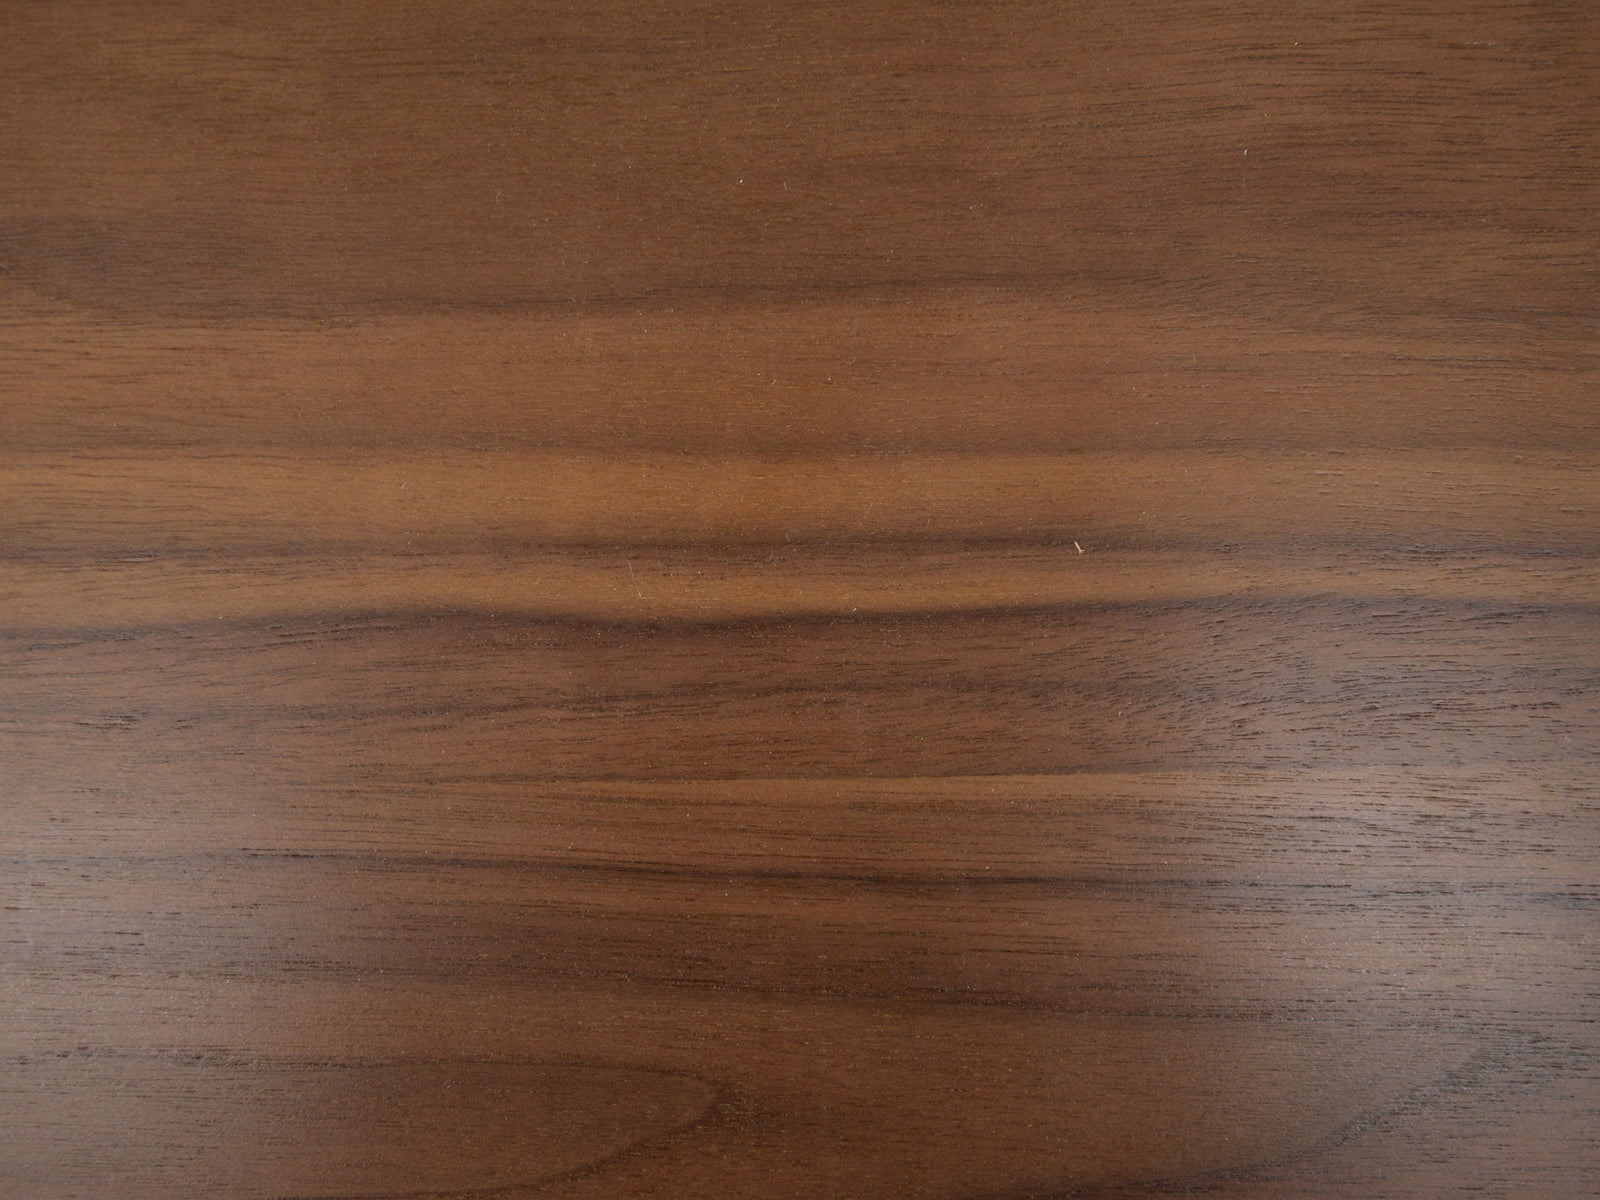 Calibre SQ Wooden Bedside Table - Walnut-Side Table-Calibre-Prime Furniture